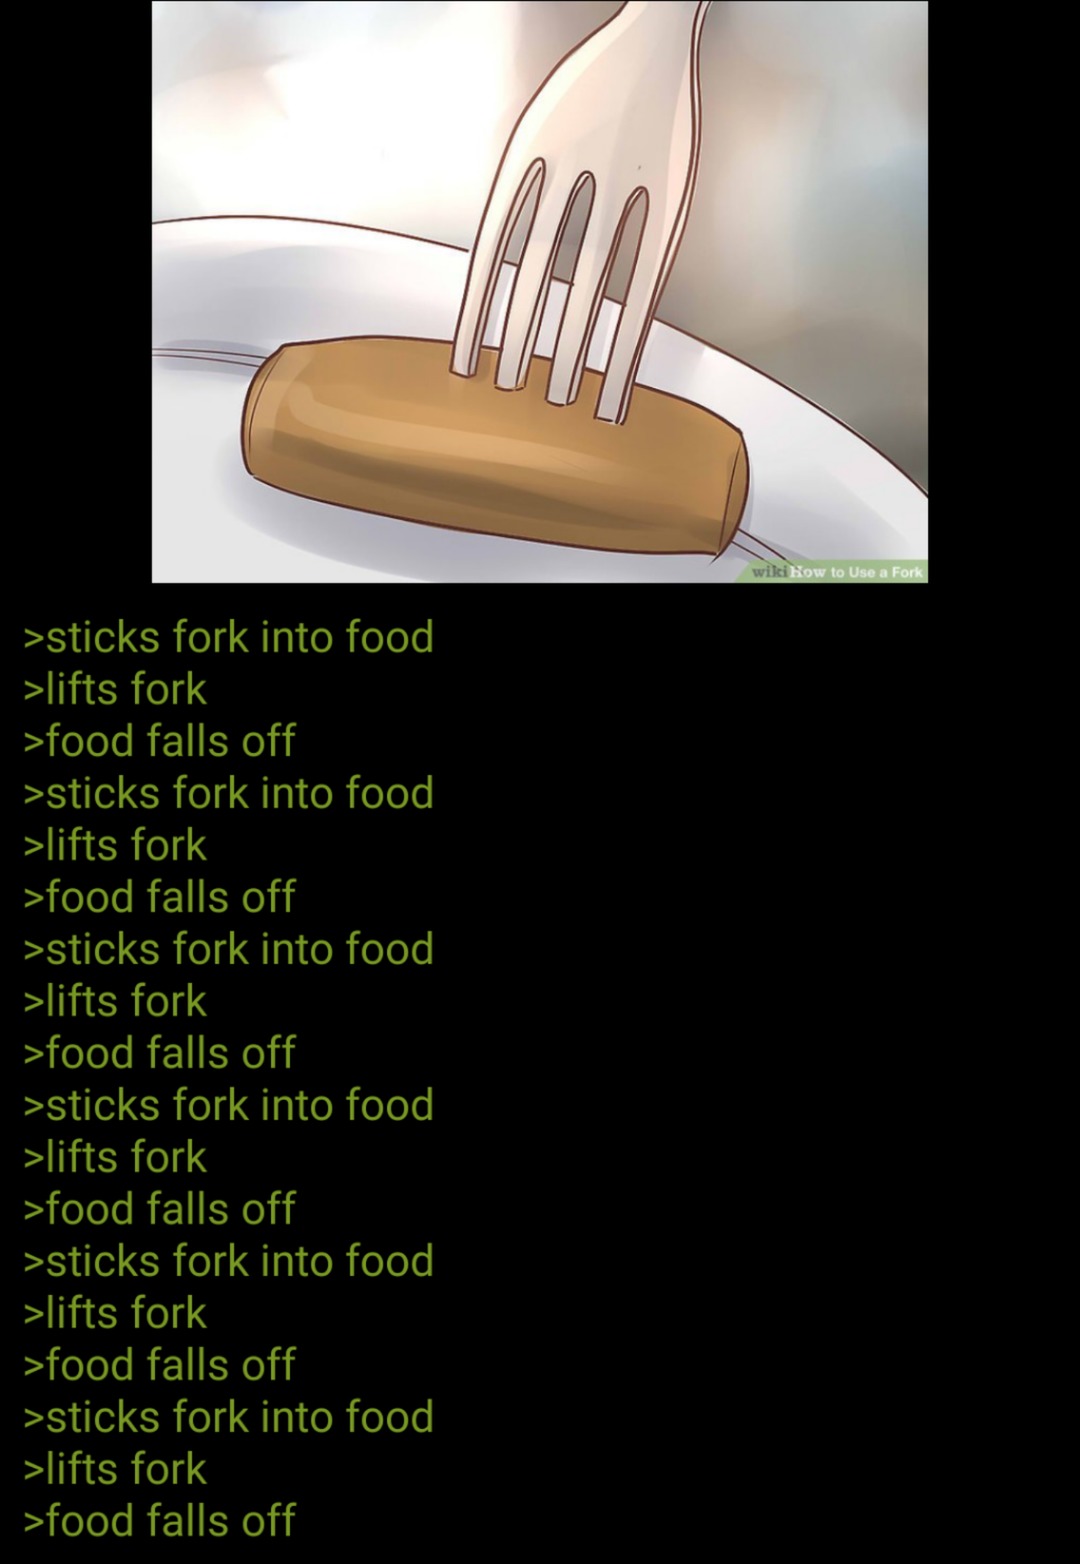 dongs in a fork - meme